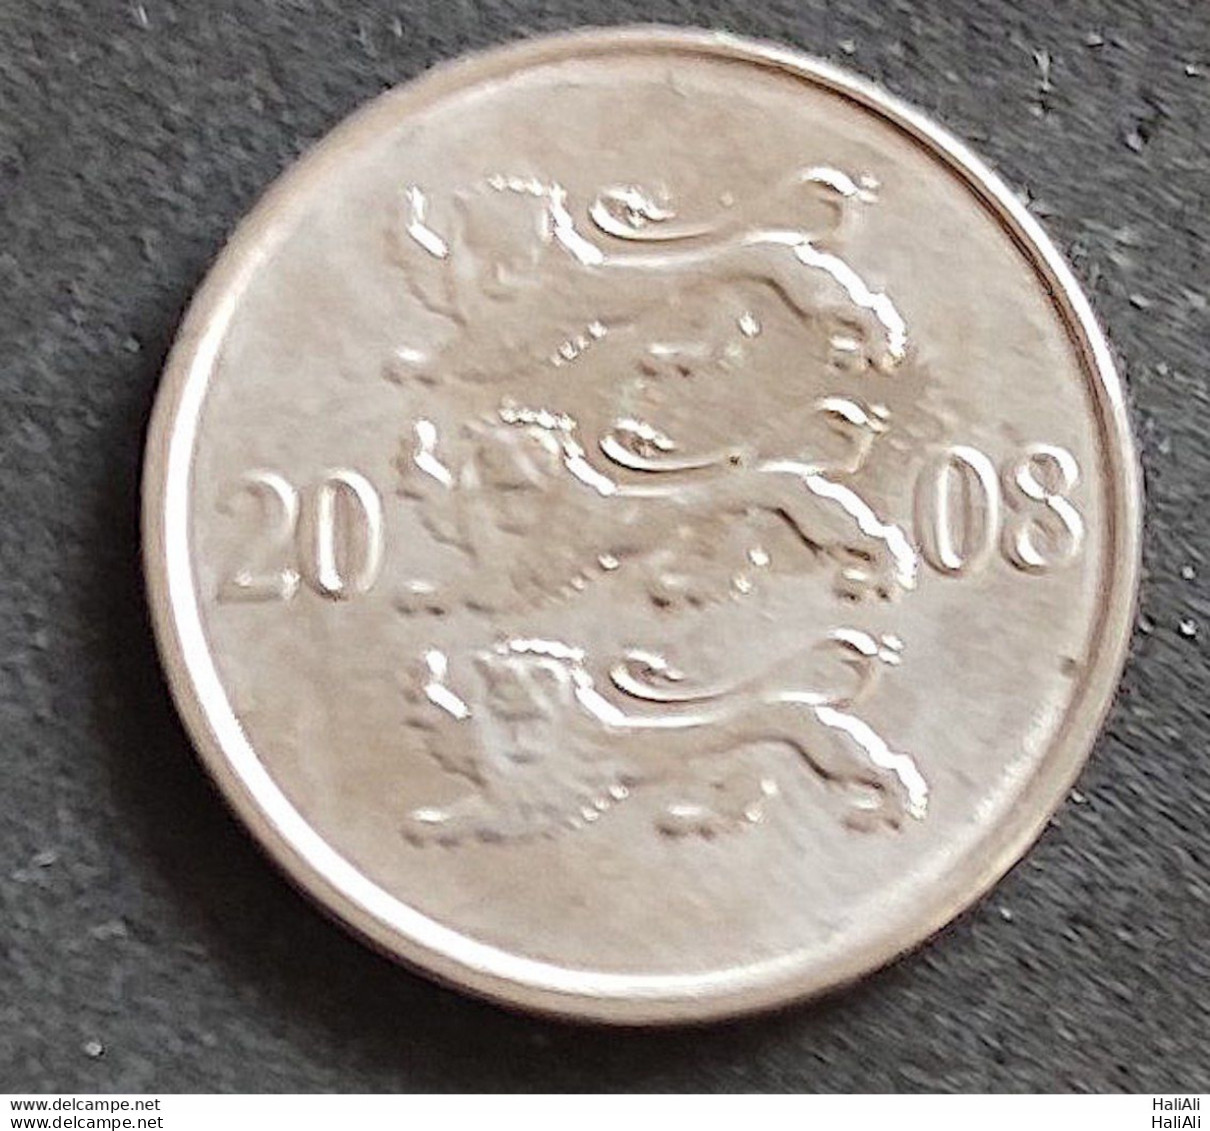 Coin Estonia 2008 20 Senti 1 - Estonia